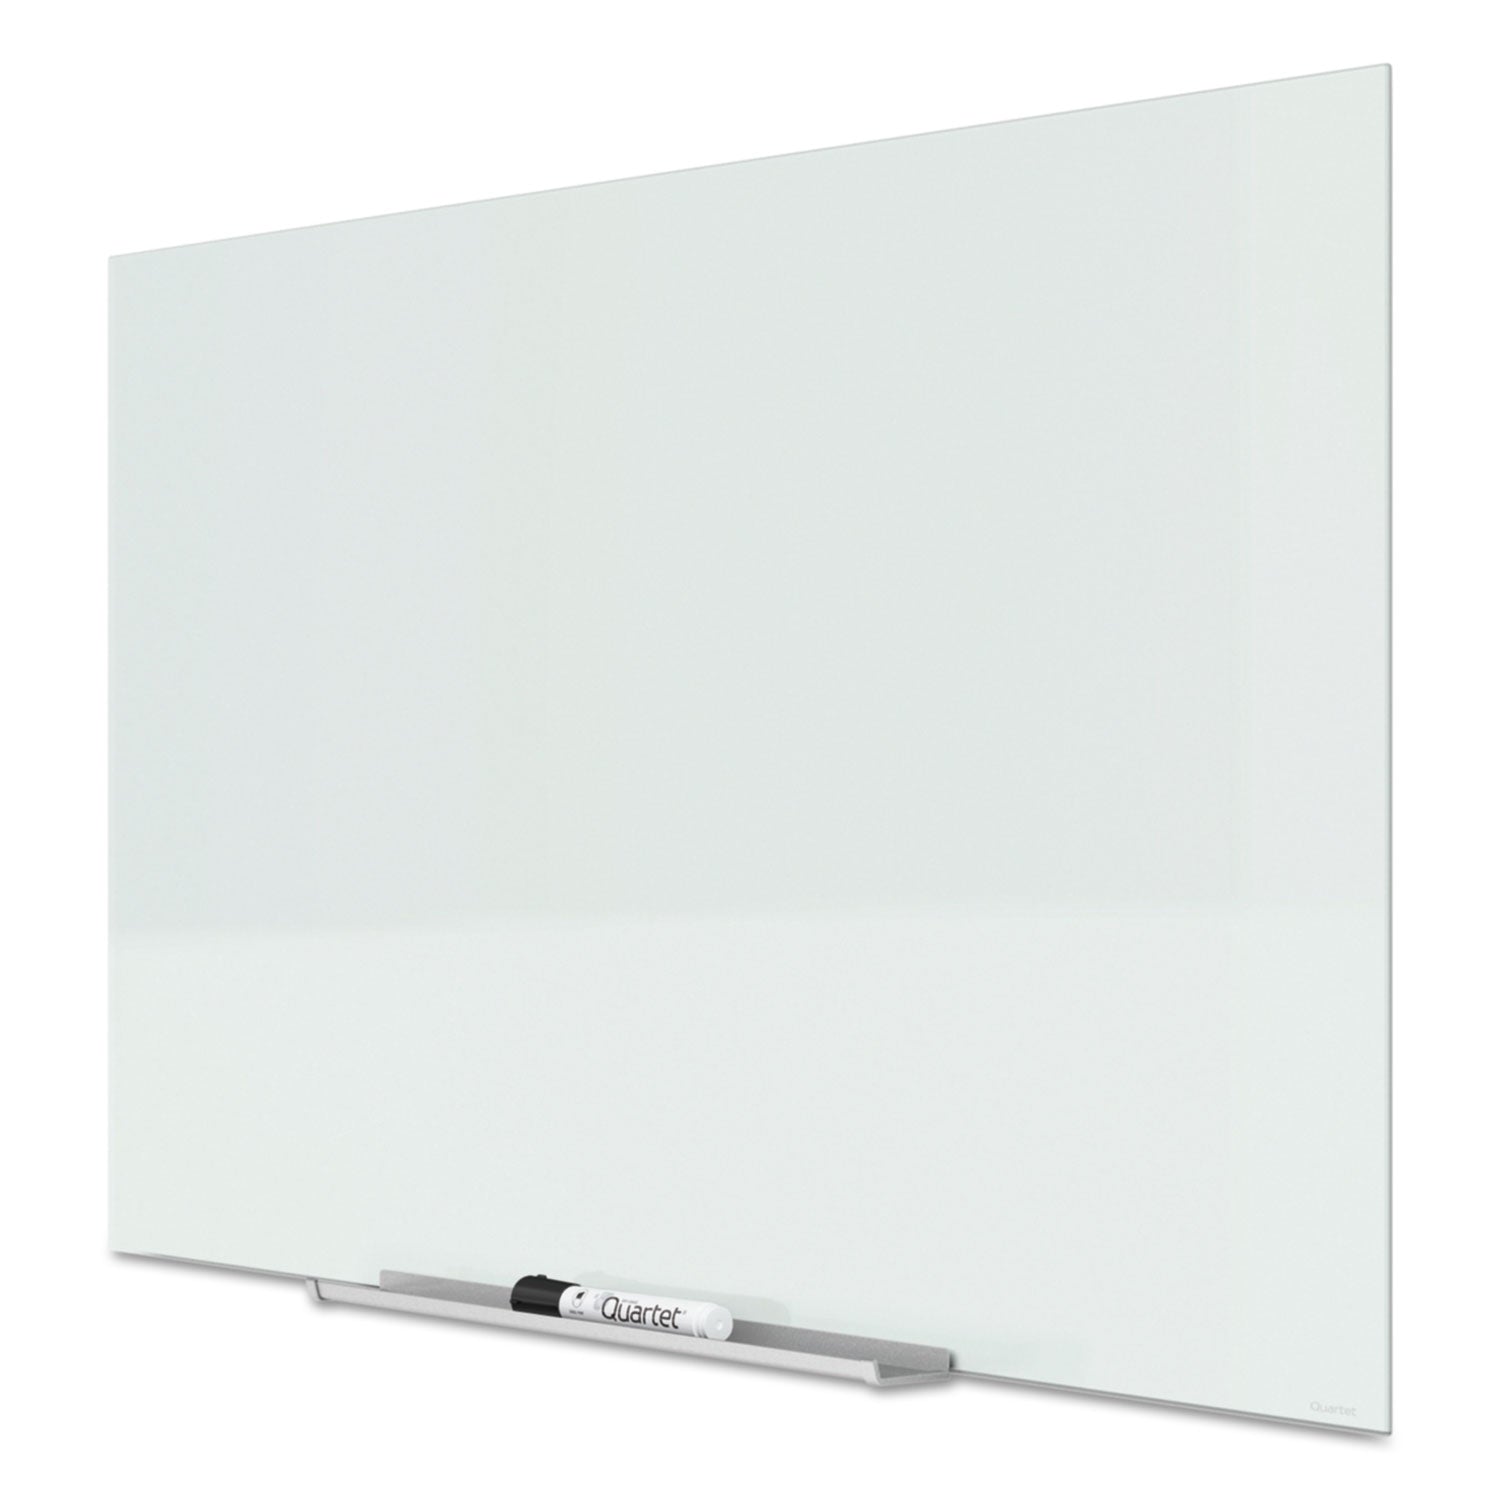 invisamount-magnetic-glass-marker-board-50-x-28-white-surface_qrtg5028imw - 5